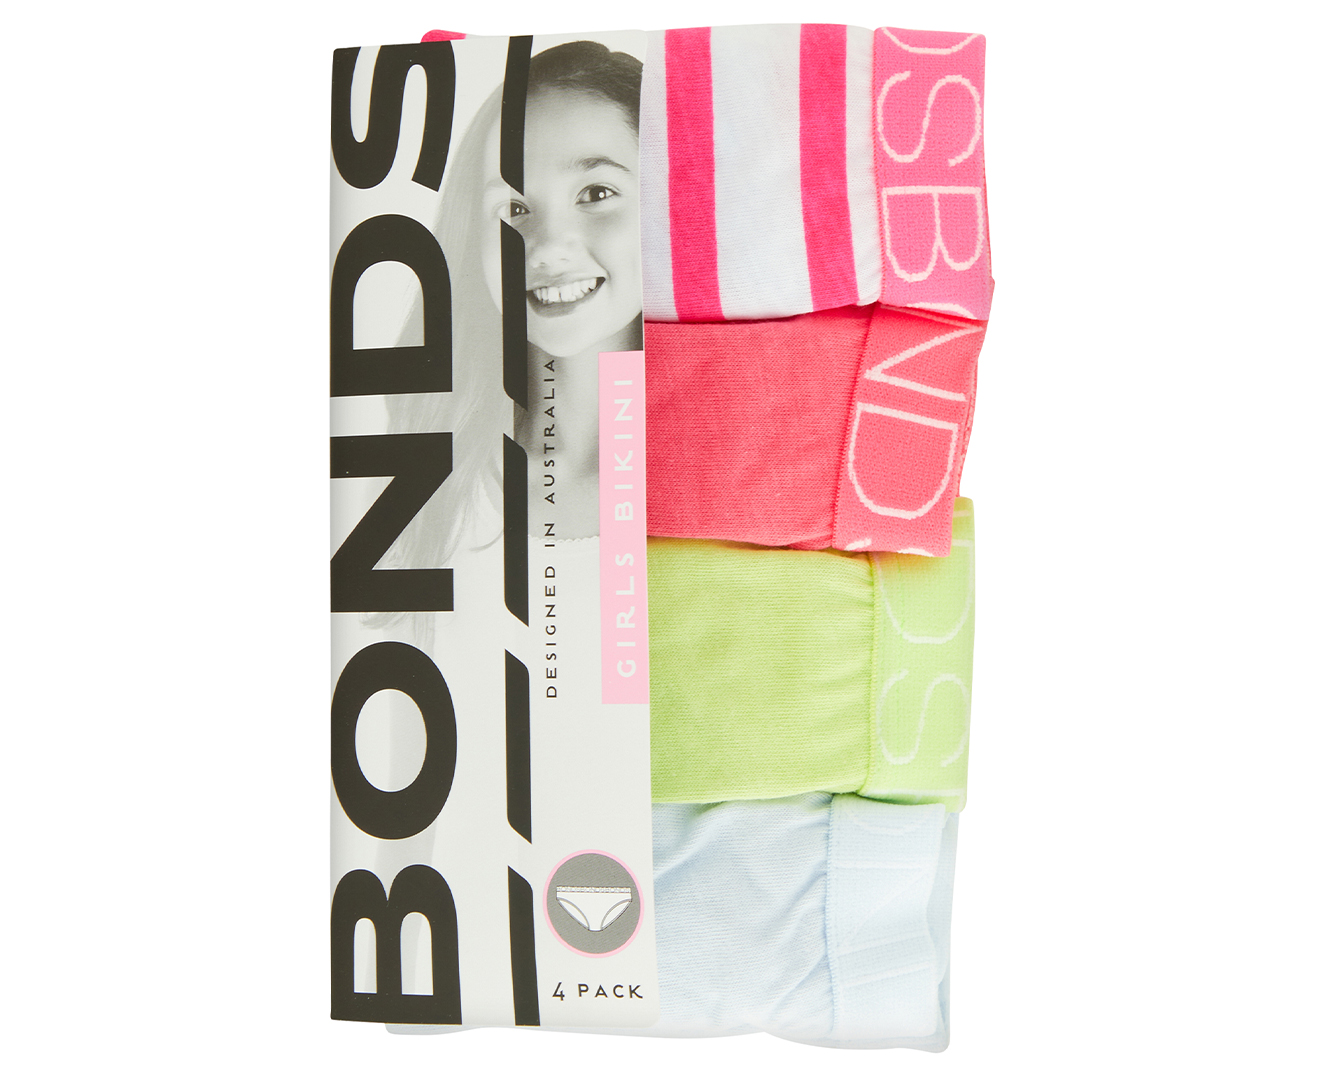 4 Pack Bonds Girls Bikini Briefs